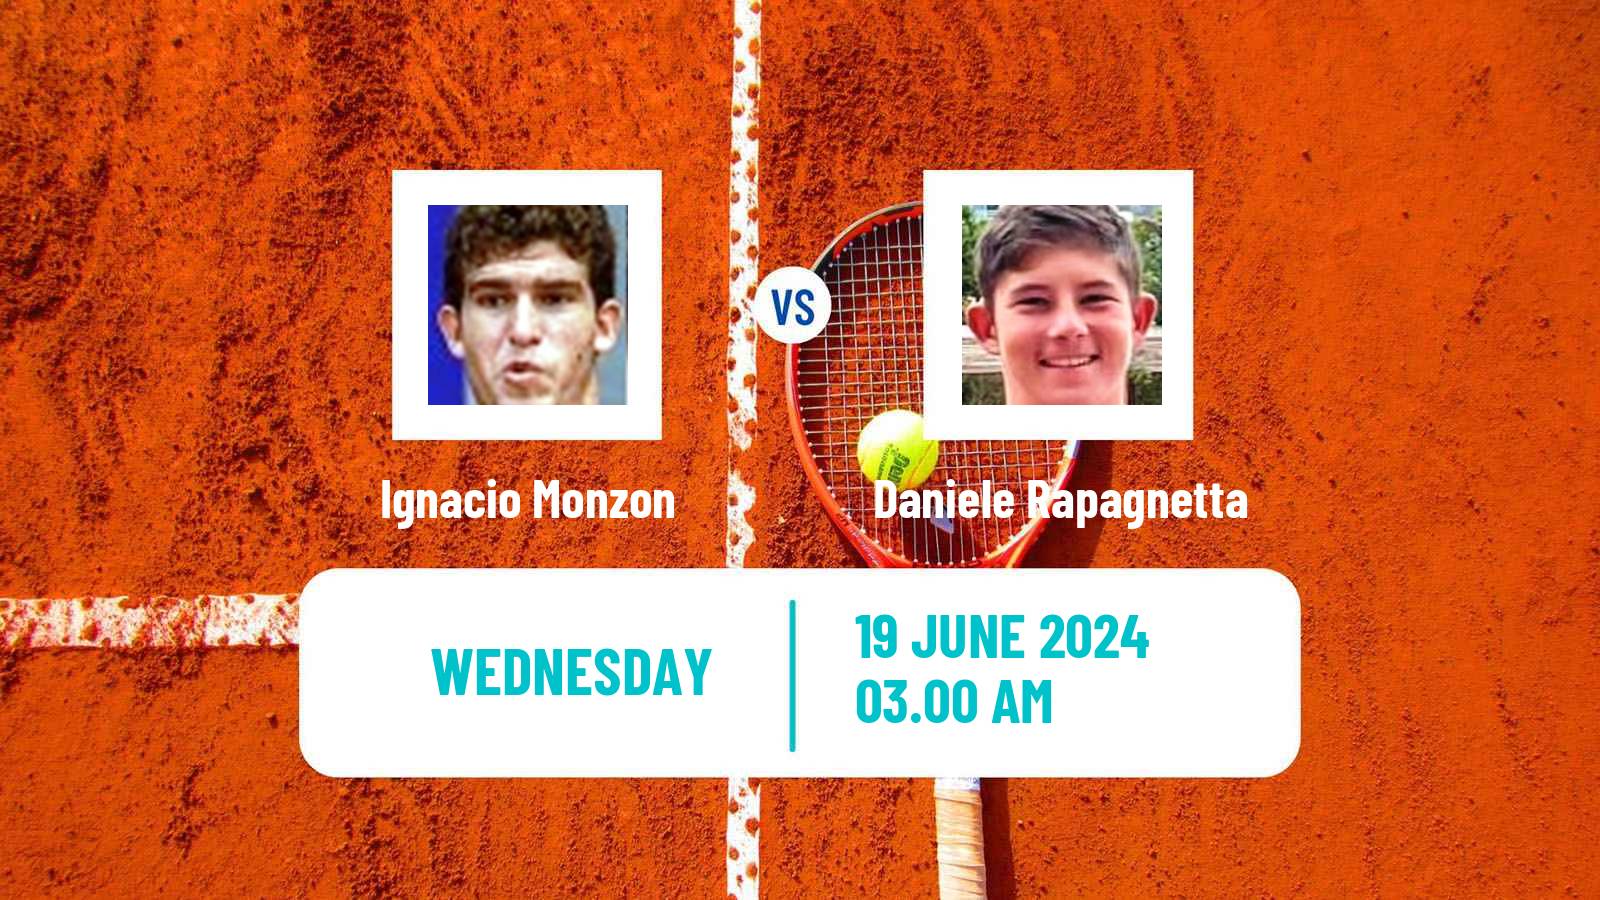 Tennis ITF M15 Koszalin 2 Men Ignacio Monzon - Daniele Rapagnetta